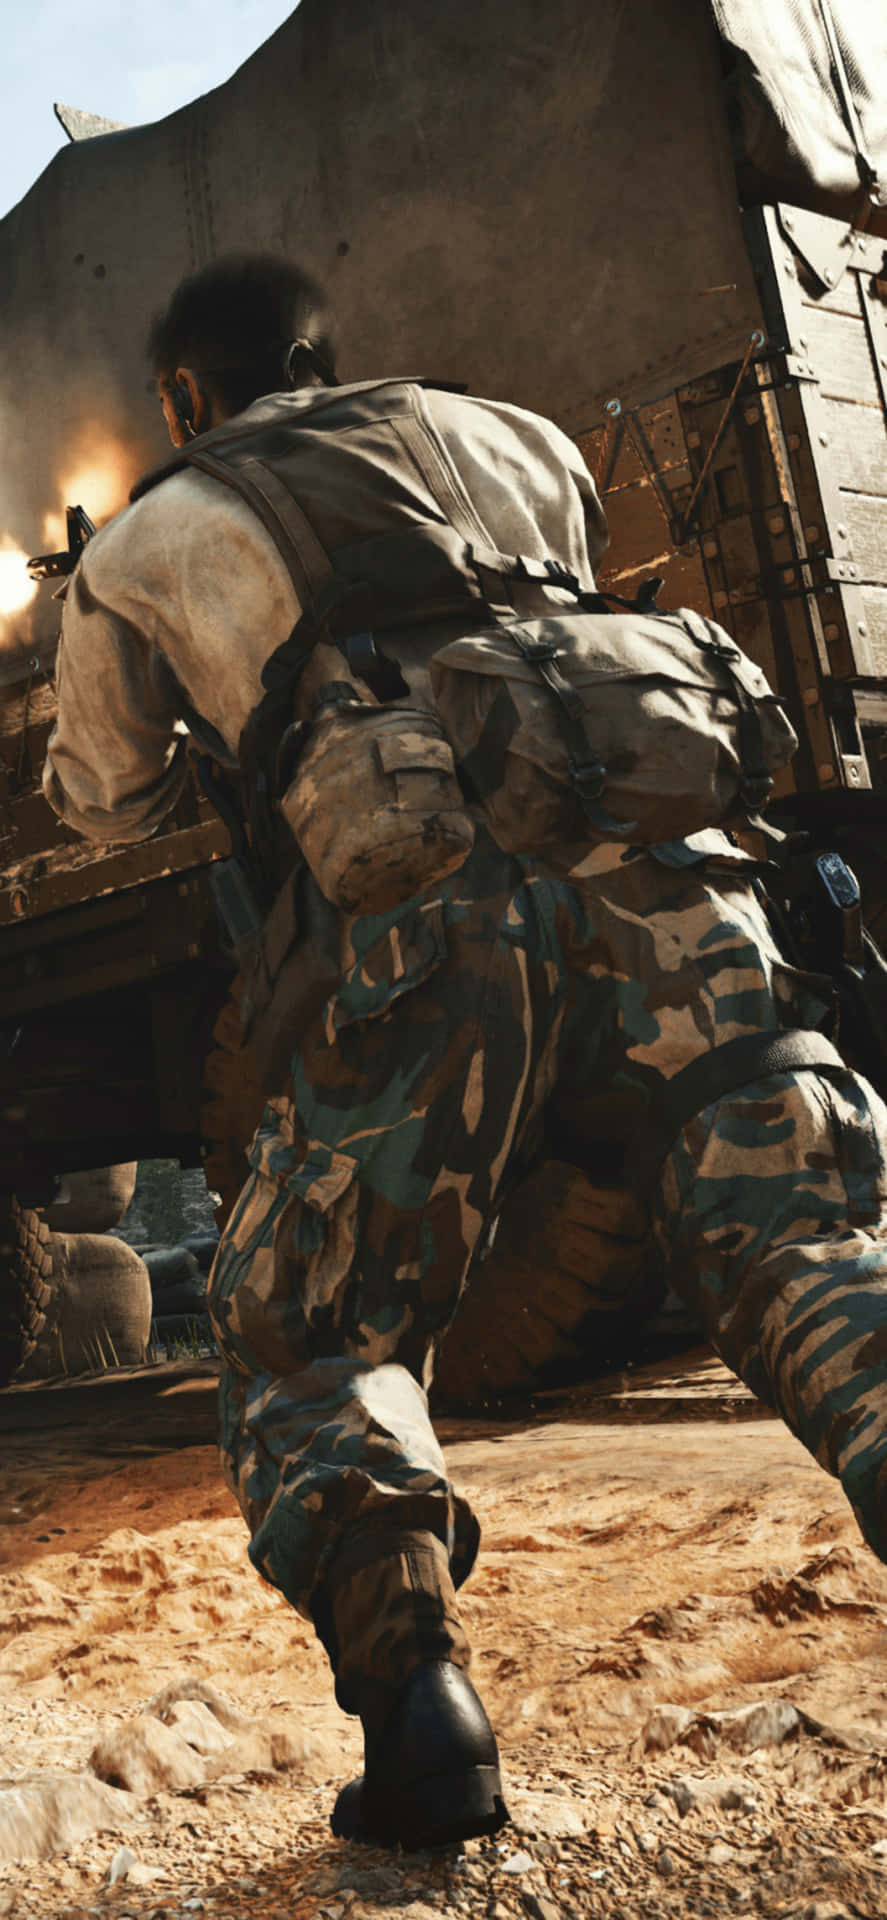 Iphonexs Call Of Duty Black Ops Cold War Promo 15 Bakgrundsbild.